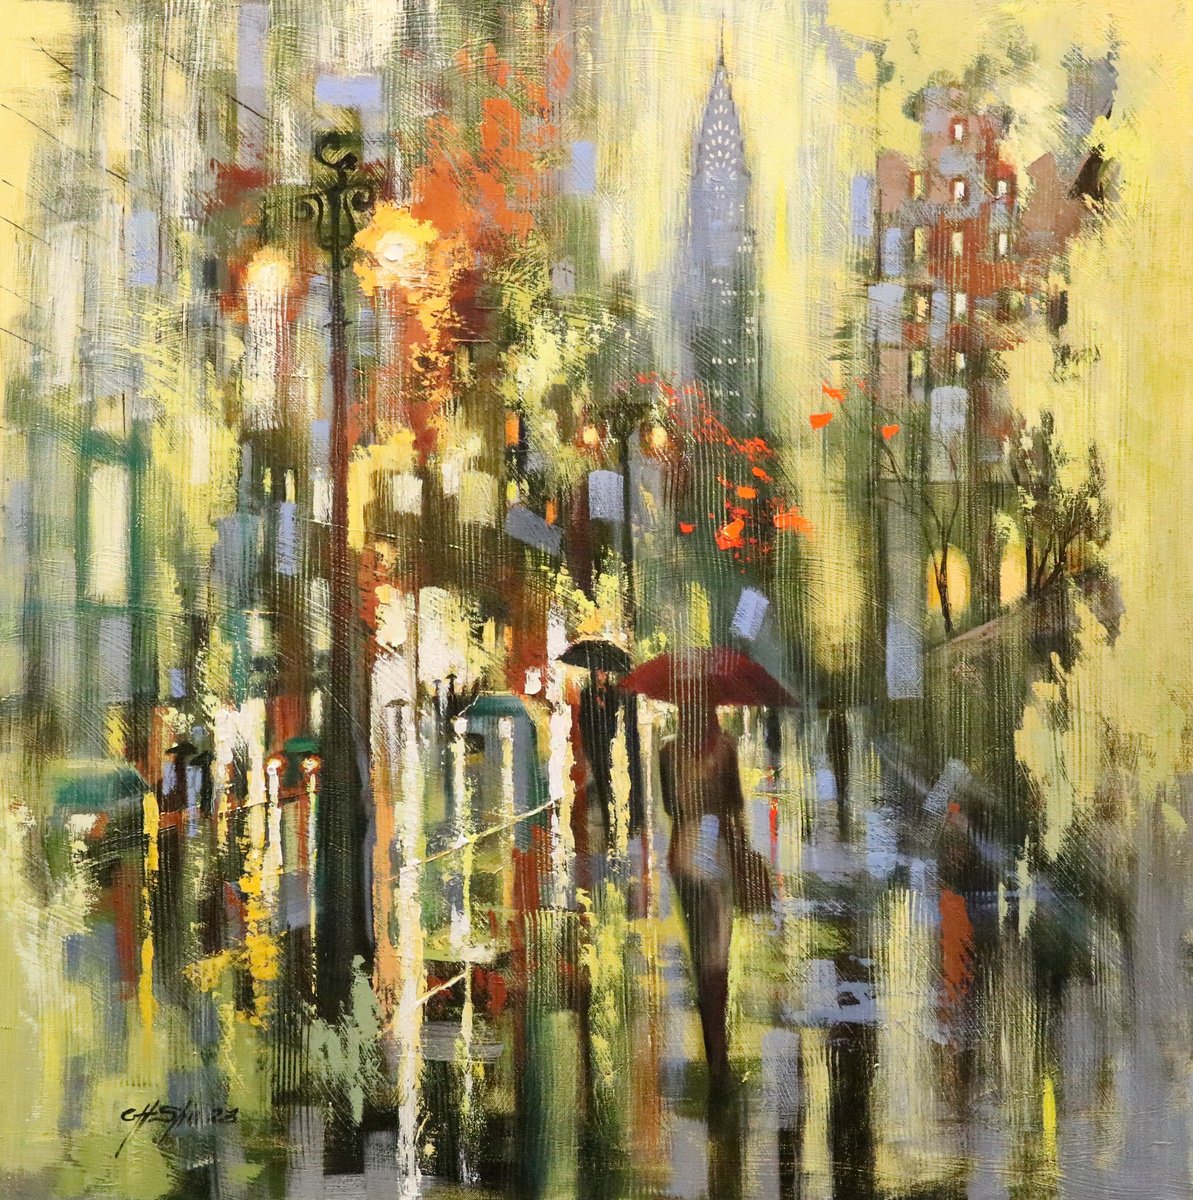 April Rain by Chin H Shin